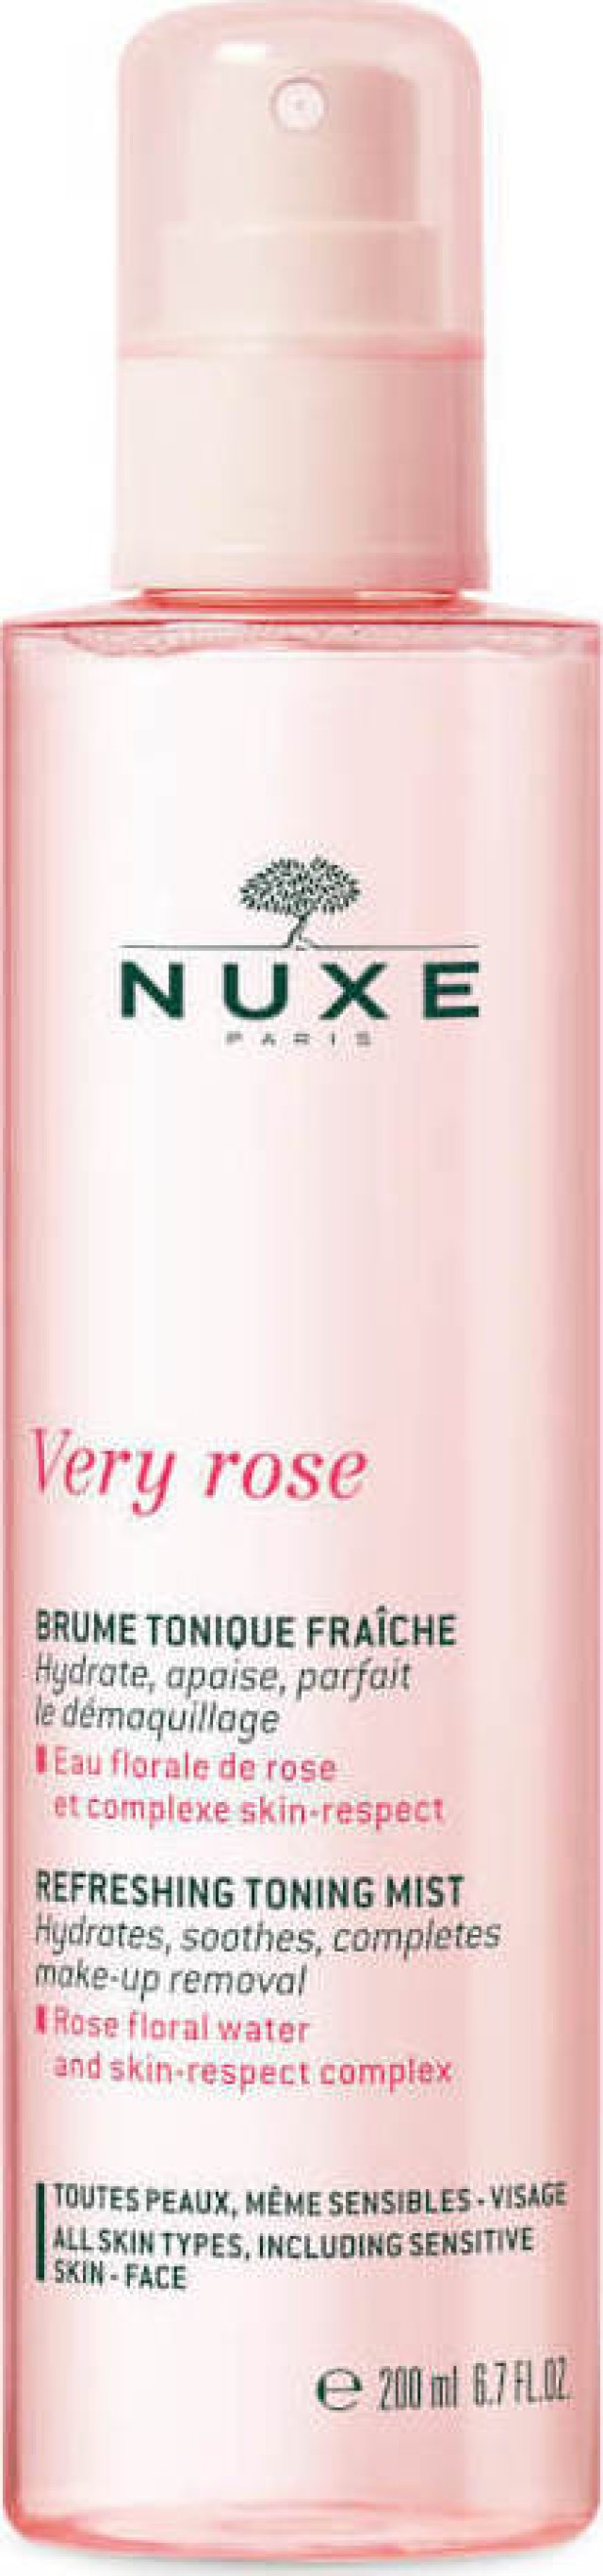 Nuxe Very Rose Refresing Toning Mist Τονωτική Λοσιόν Προσώπου Σε Μορφή Spray 200ml